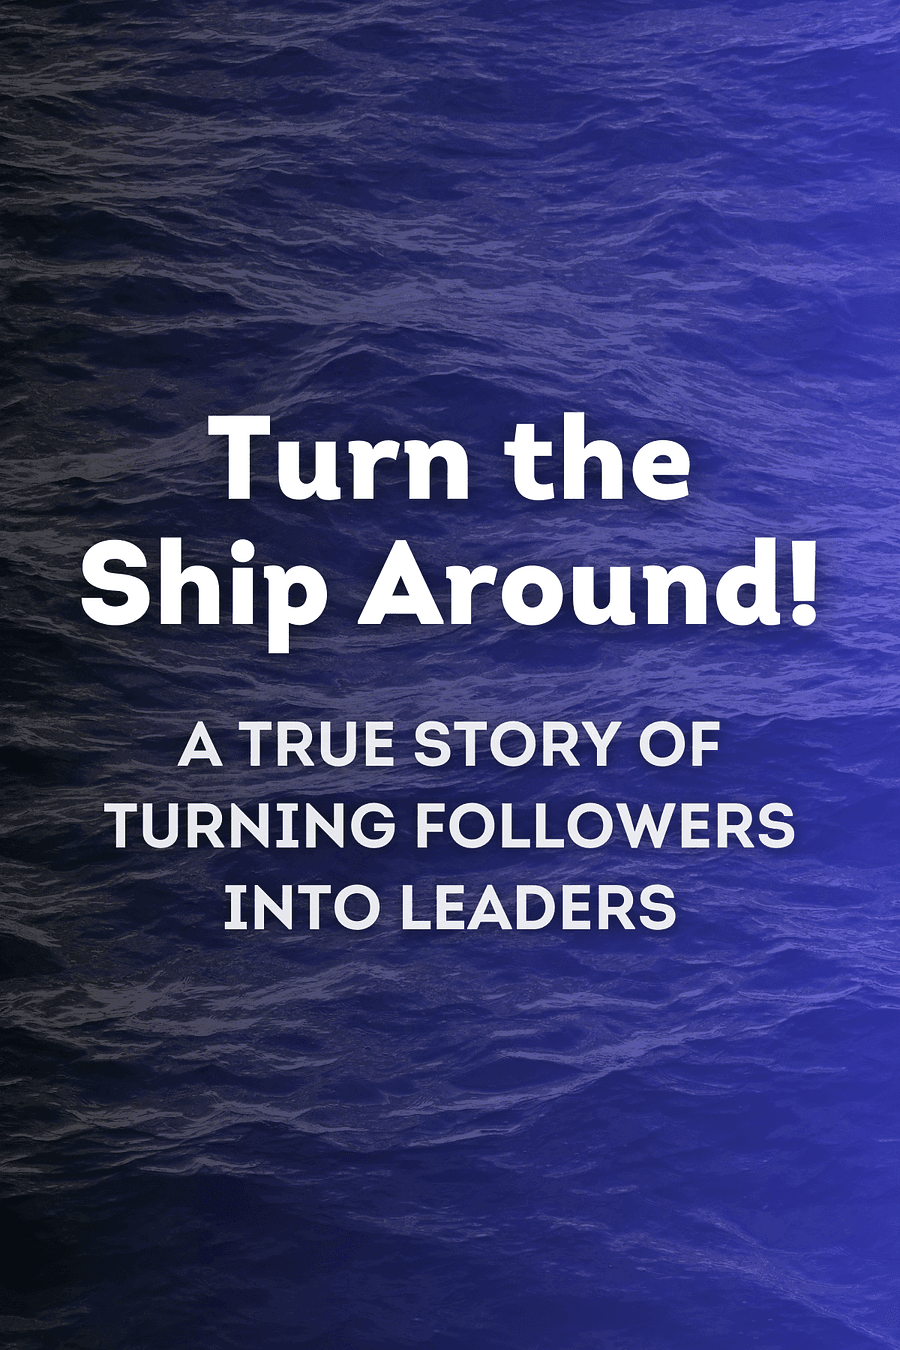 Turn the Ship Around! by L. David Marquet - Book Summary